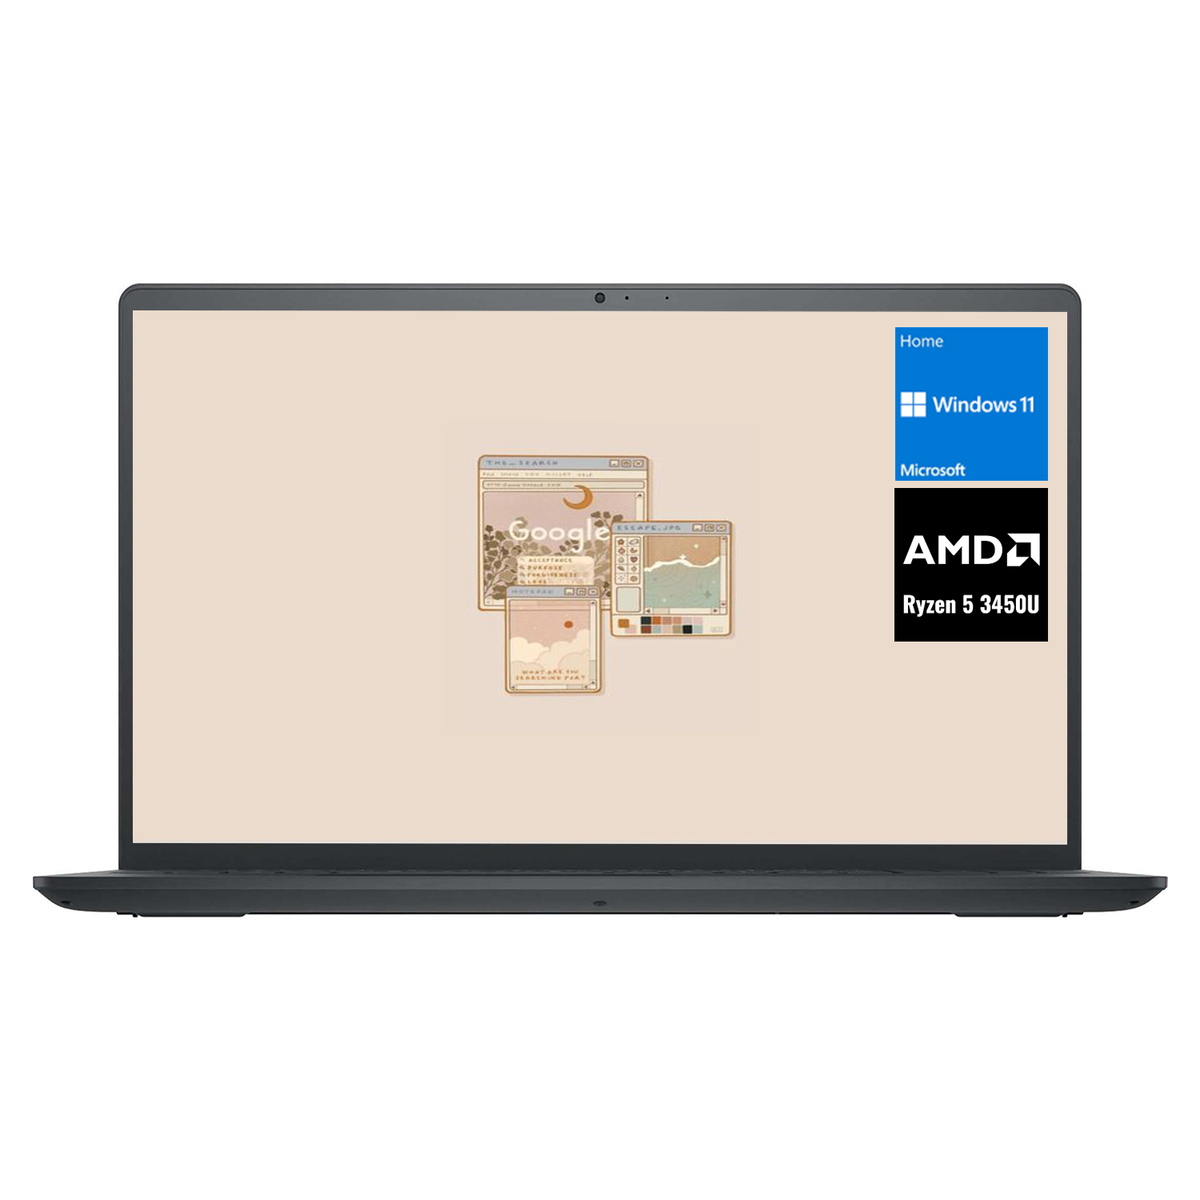 Dell Inspiron 3000 Series 3515 Laptop, 15.6" HD Display, AMD Ryzen 5 3450U Processor, Wi-Fi, Webcam, SD Card Reader, HDMI, Windows 11 Home, Carbon Black